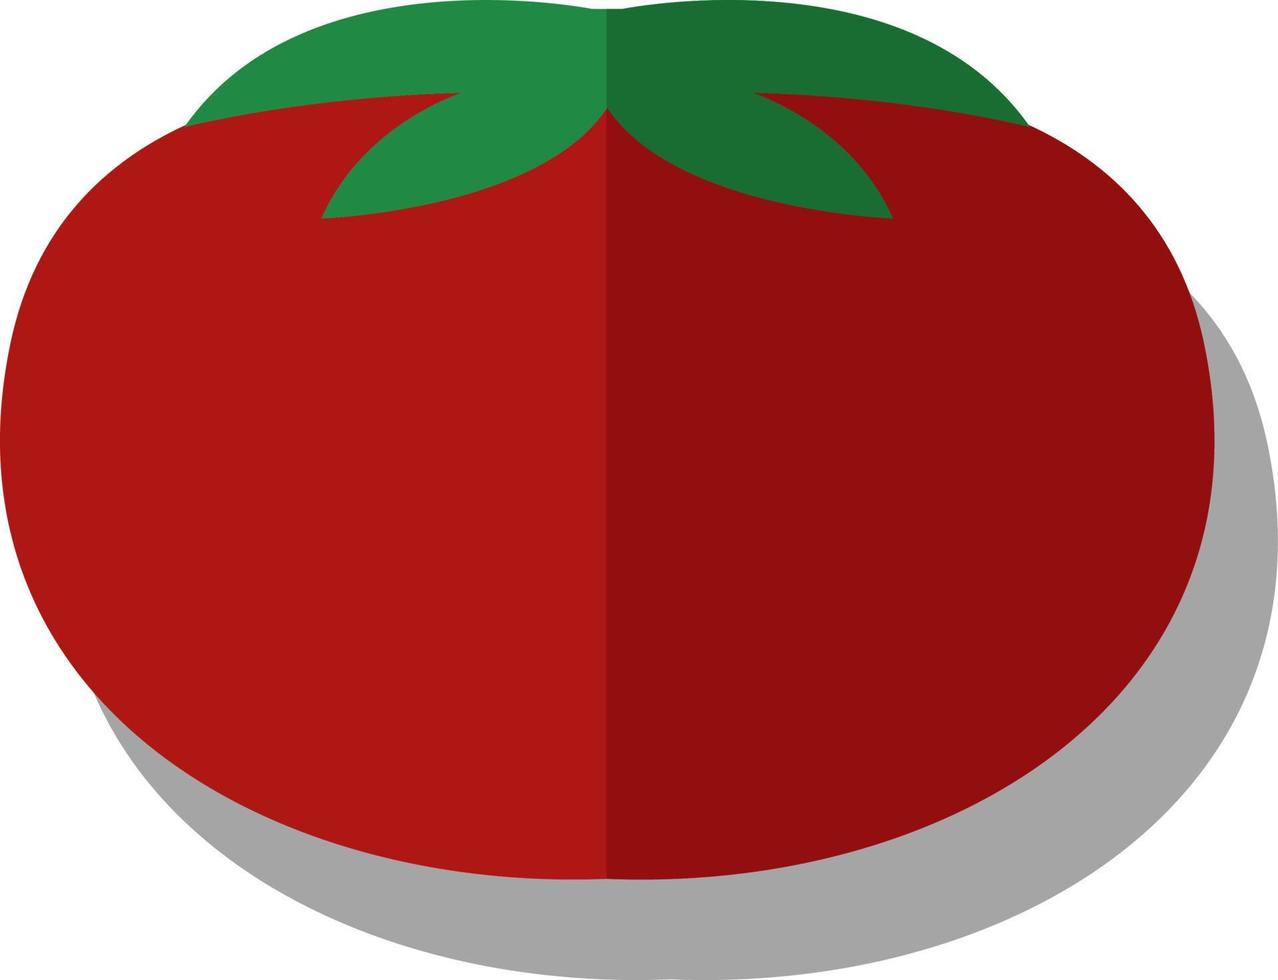 röd tomat, illustration, vektor på vit bakgrund.